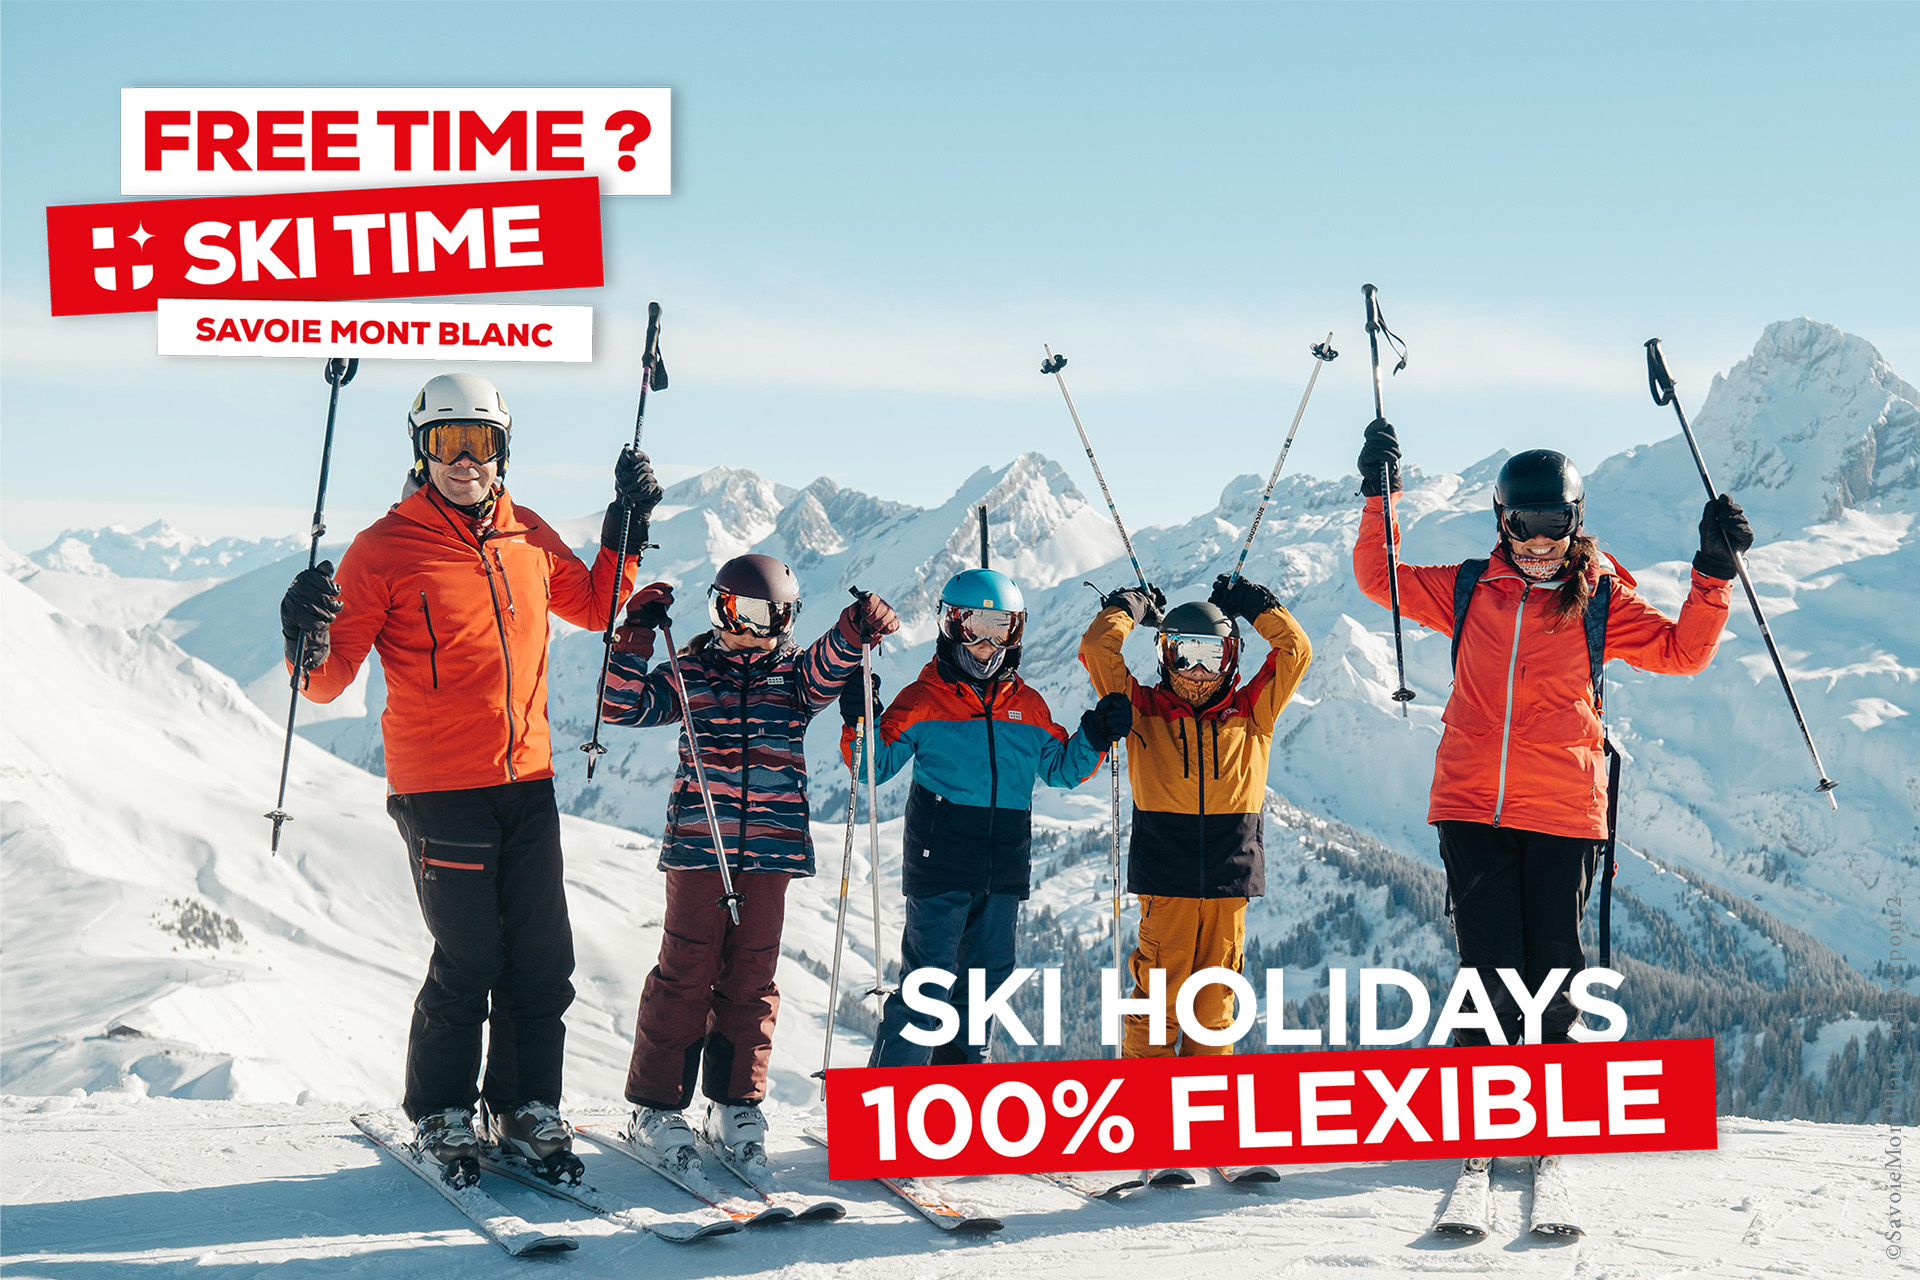 Free Time? Ski Time